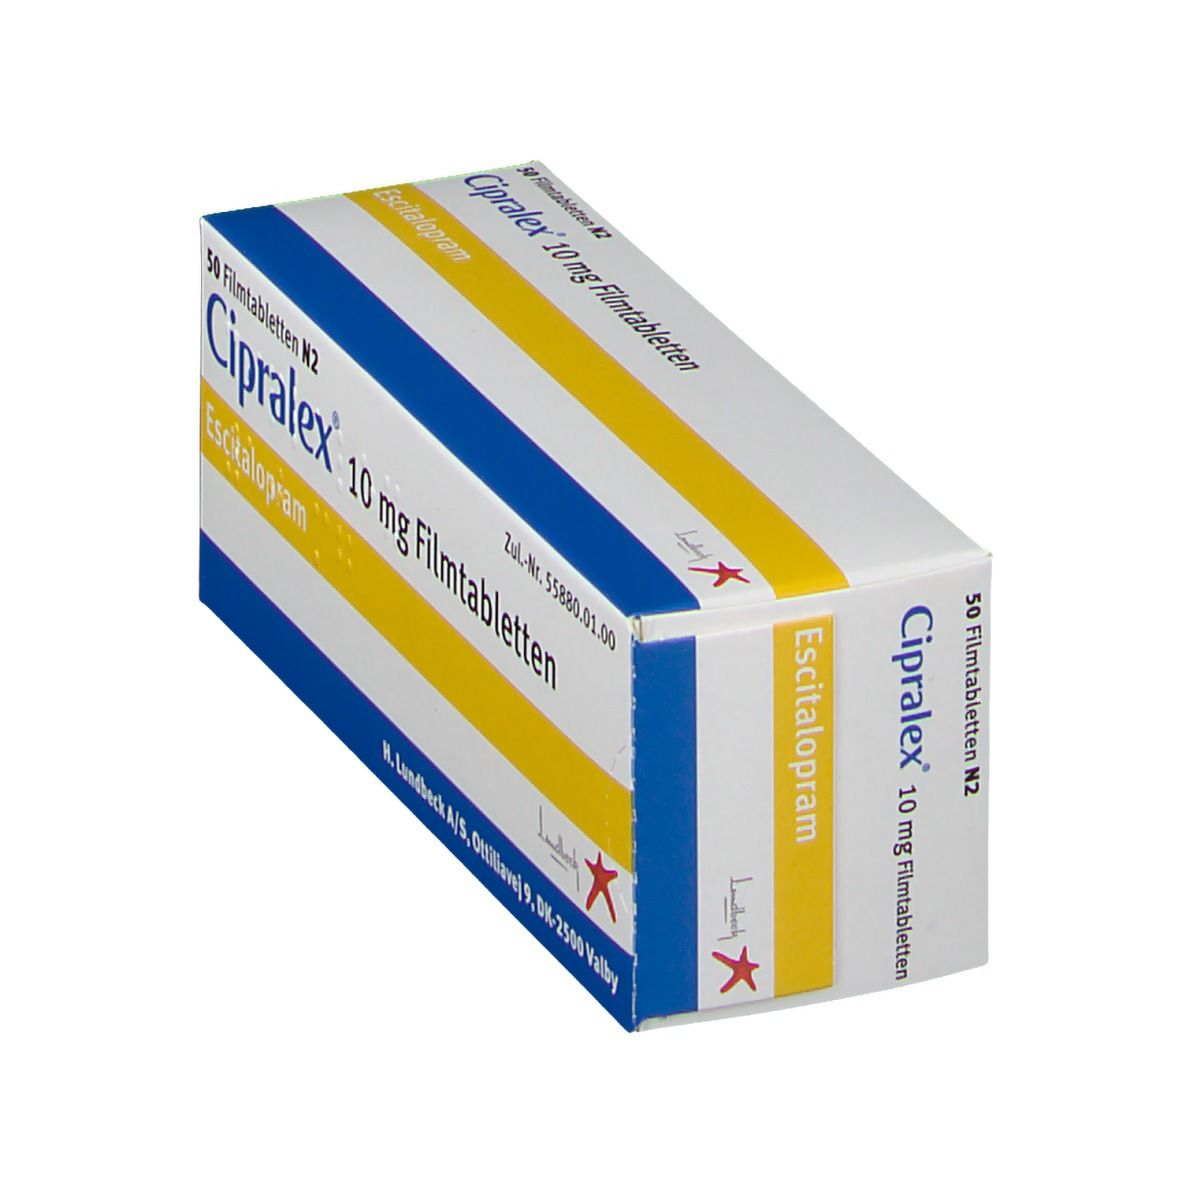 Cipralex® 10 mg